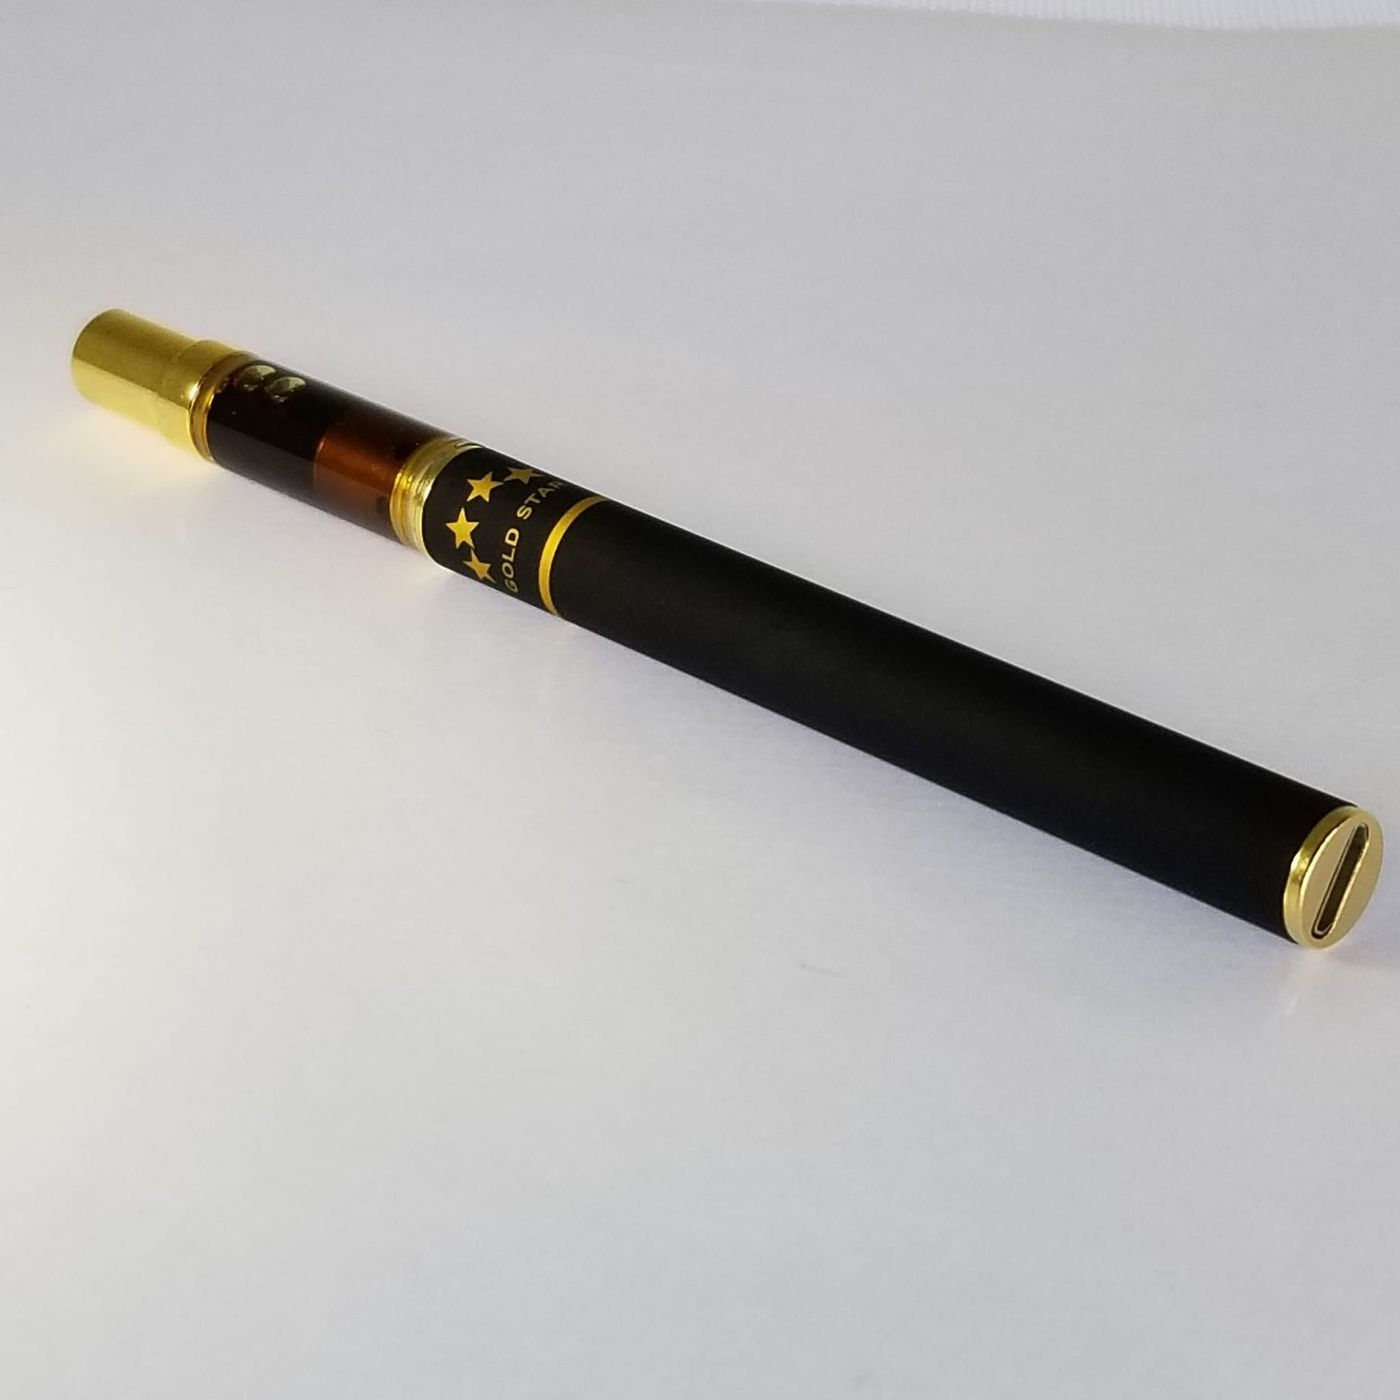 Gold Star Rosin - Disposable Vape Pen - Pink Lemon Haze 0.35g